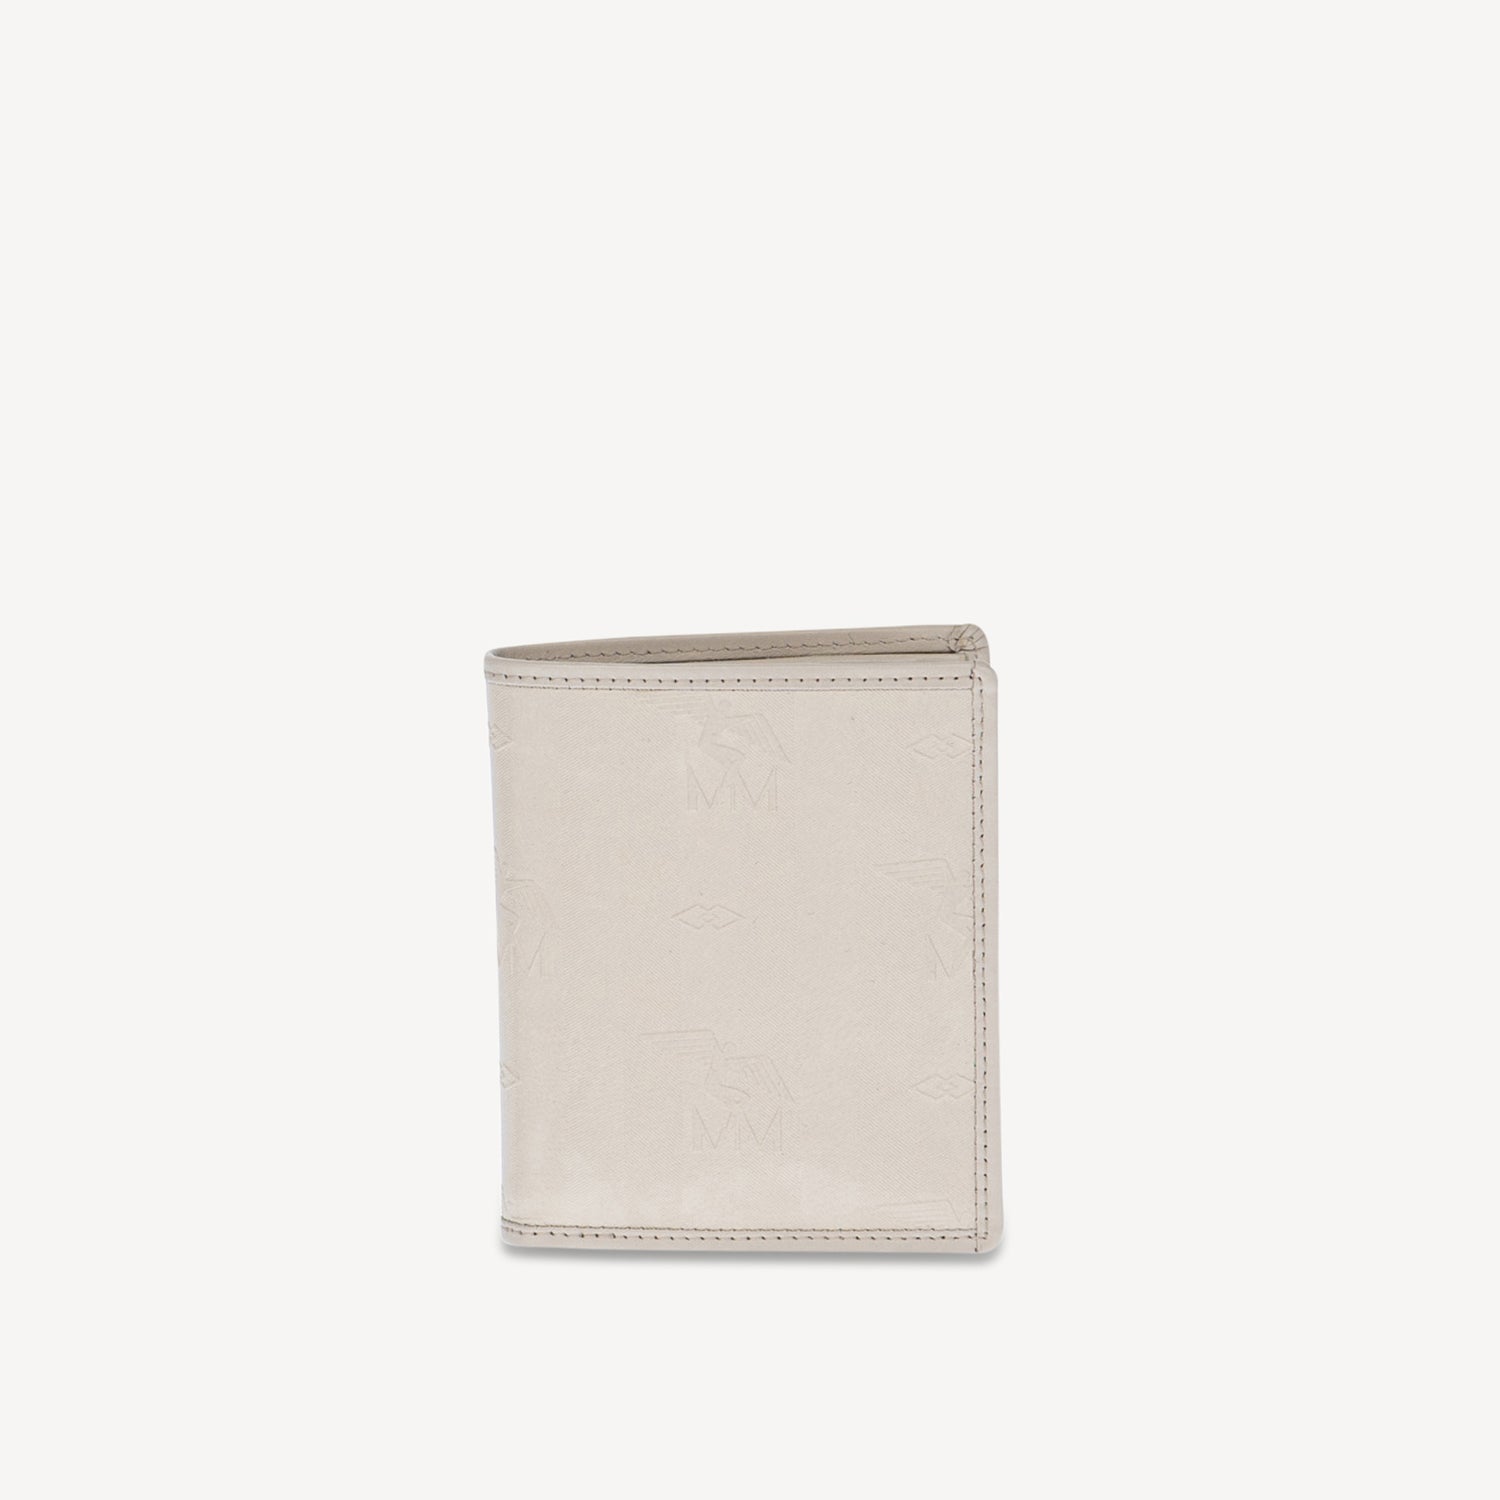 BEVERIN | Portemonnaie pearl weiß/silber